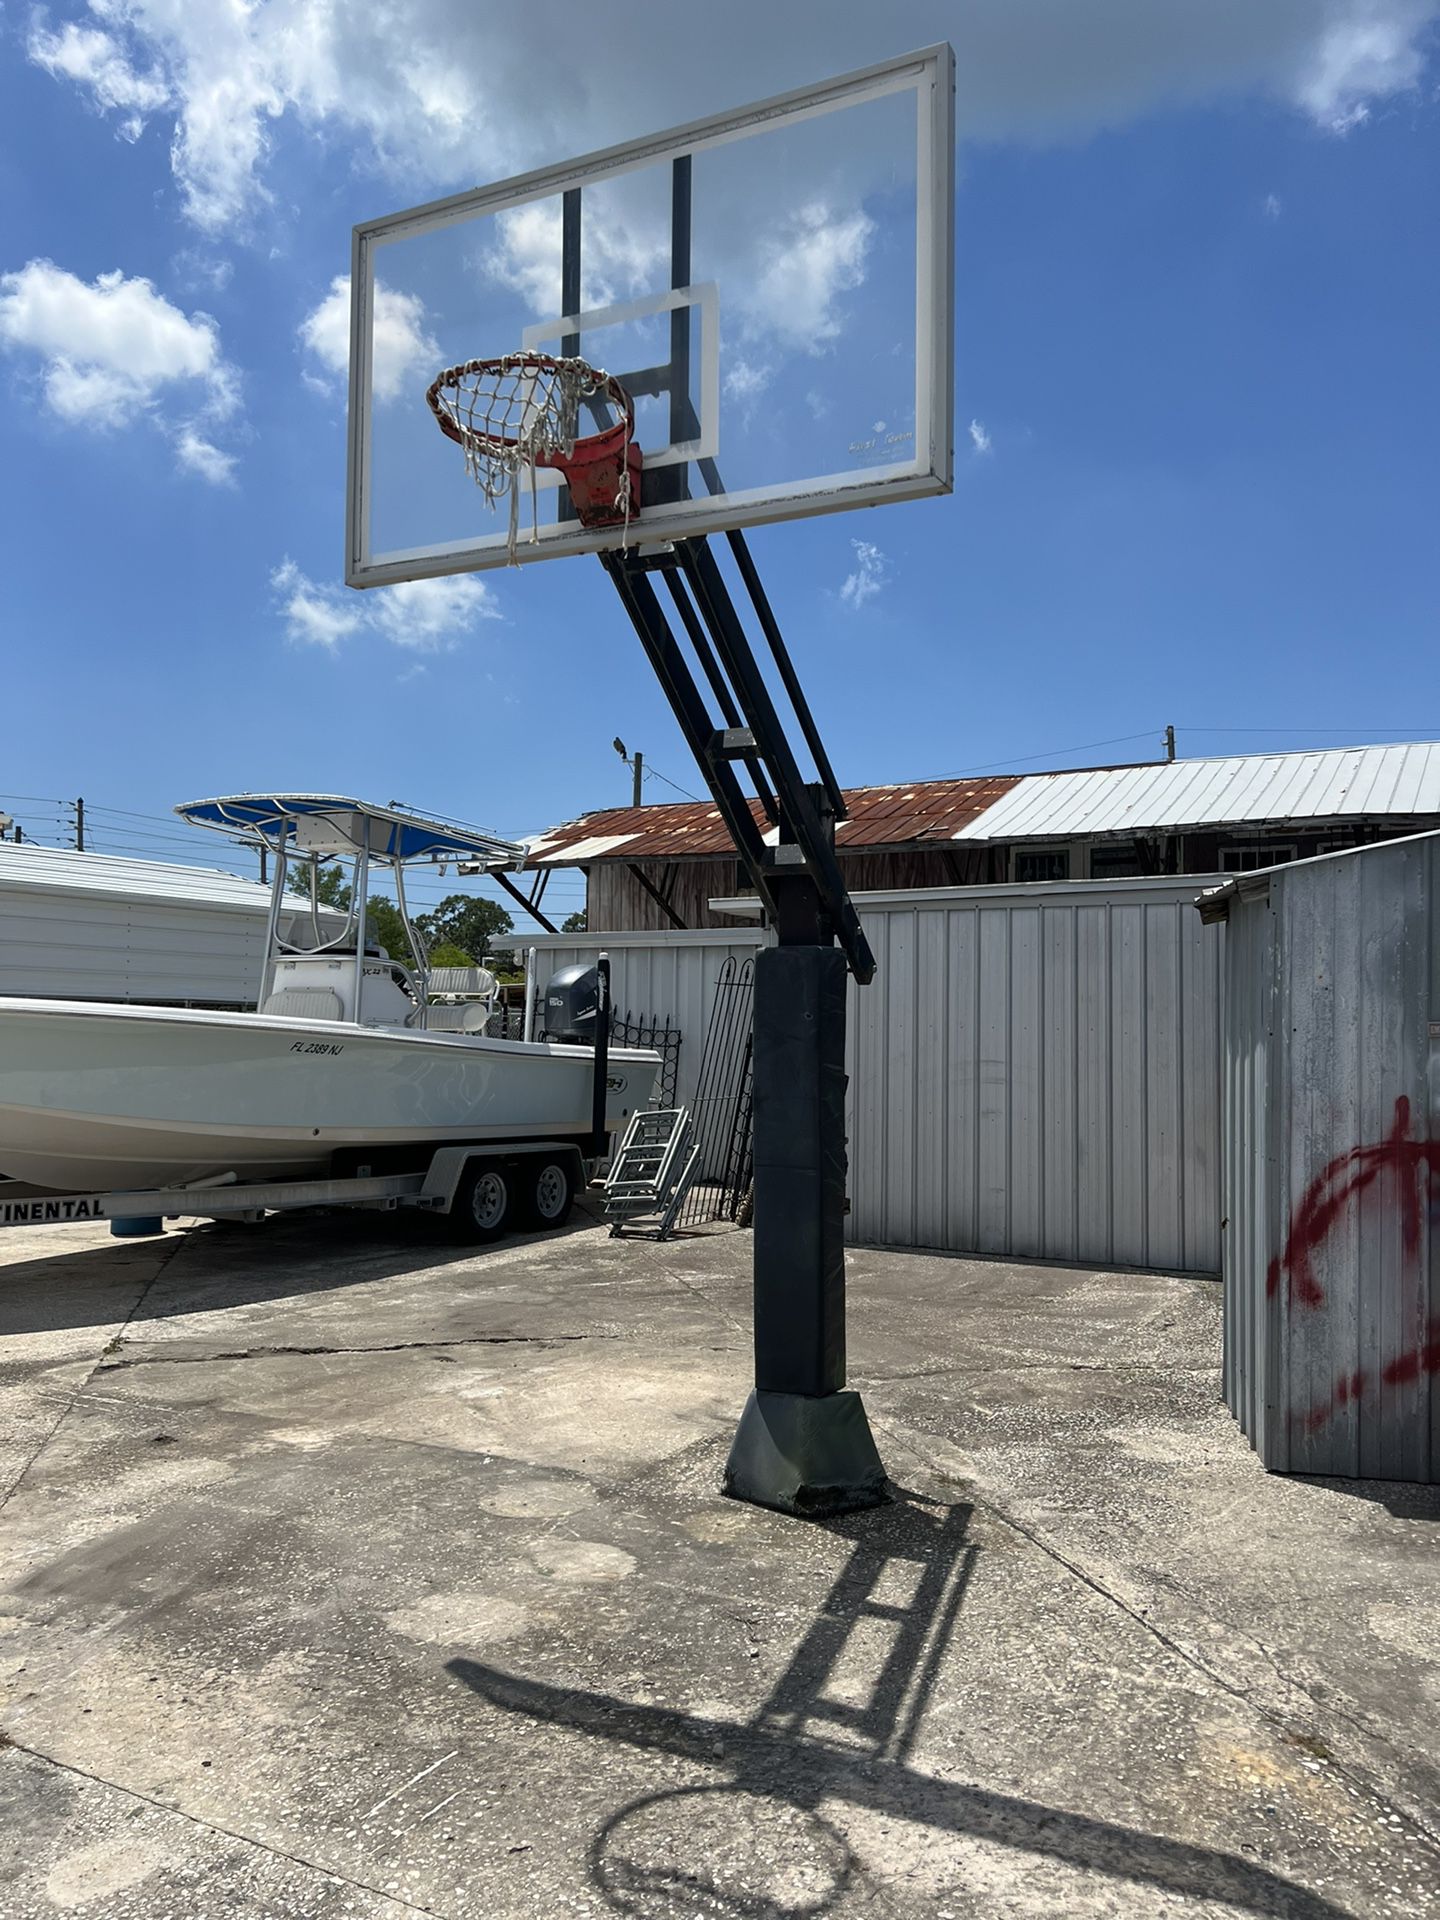 First Team Sports Adjustable Basketball Hoop